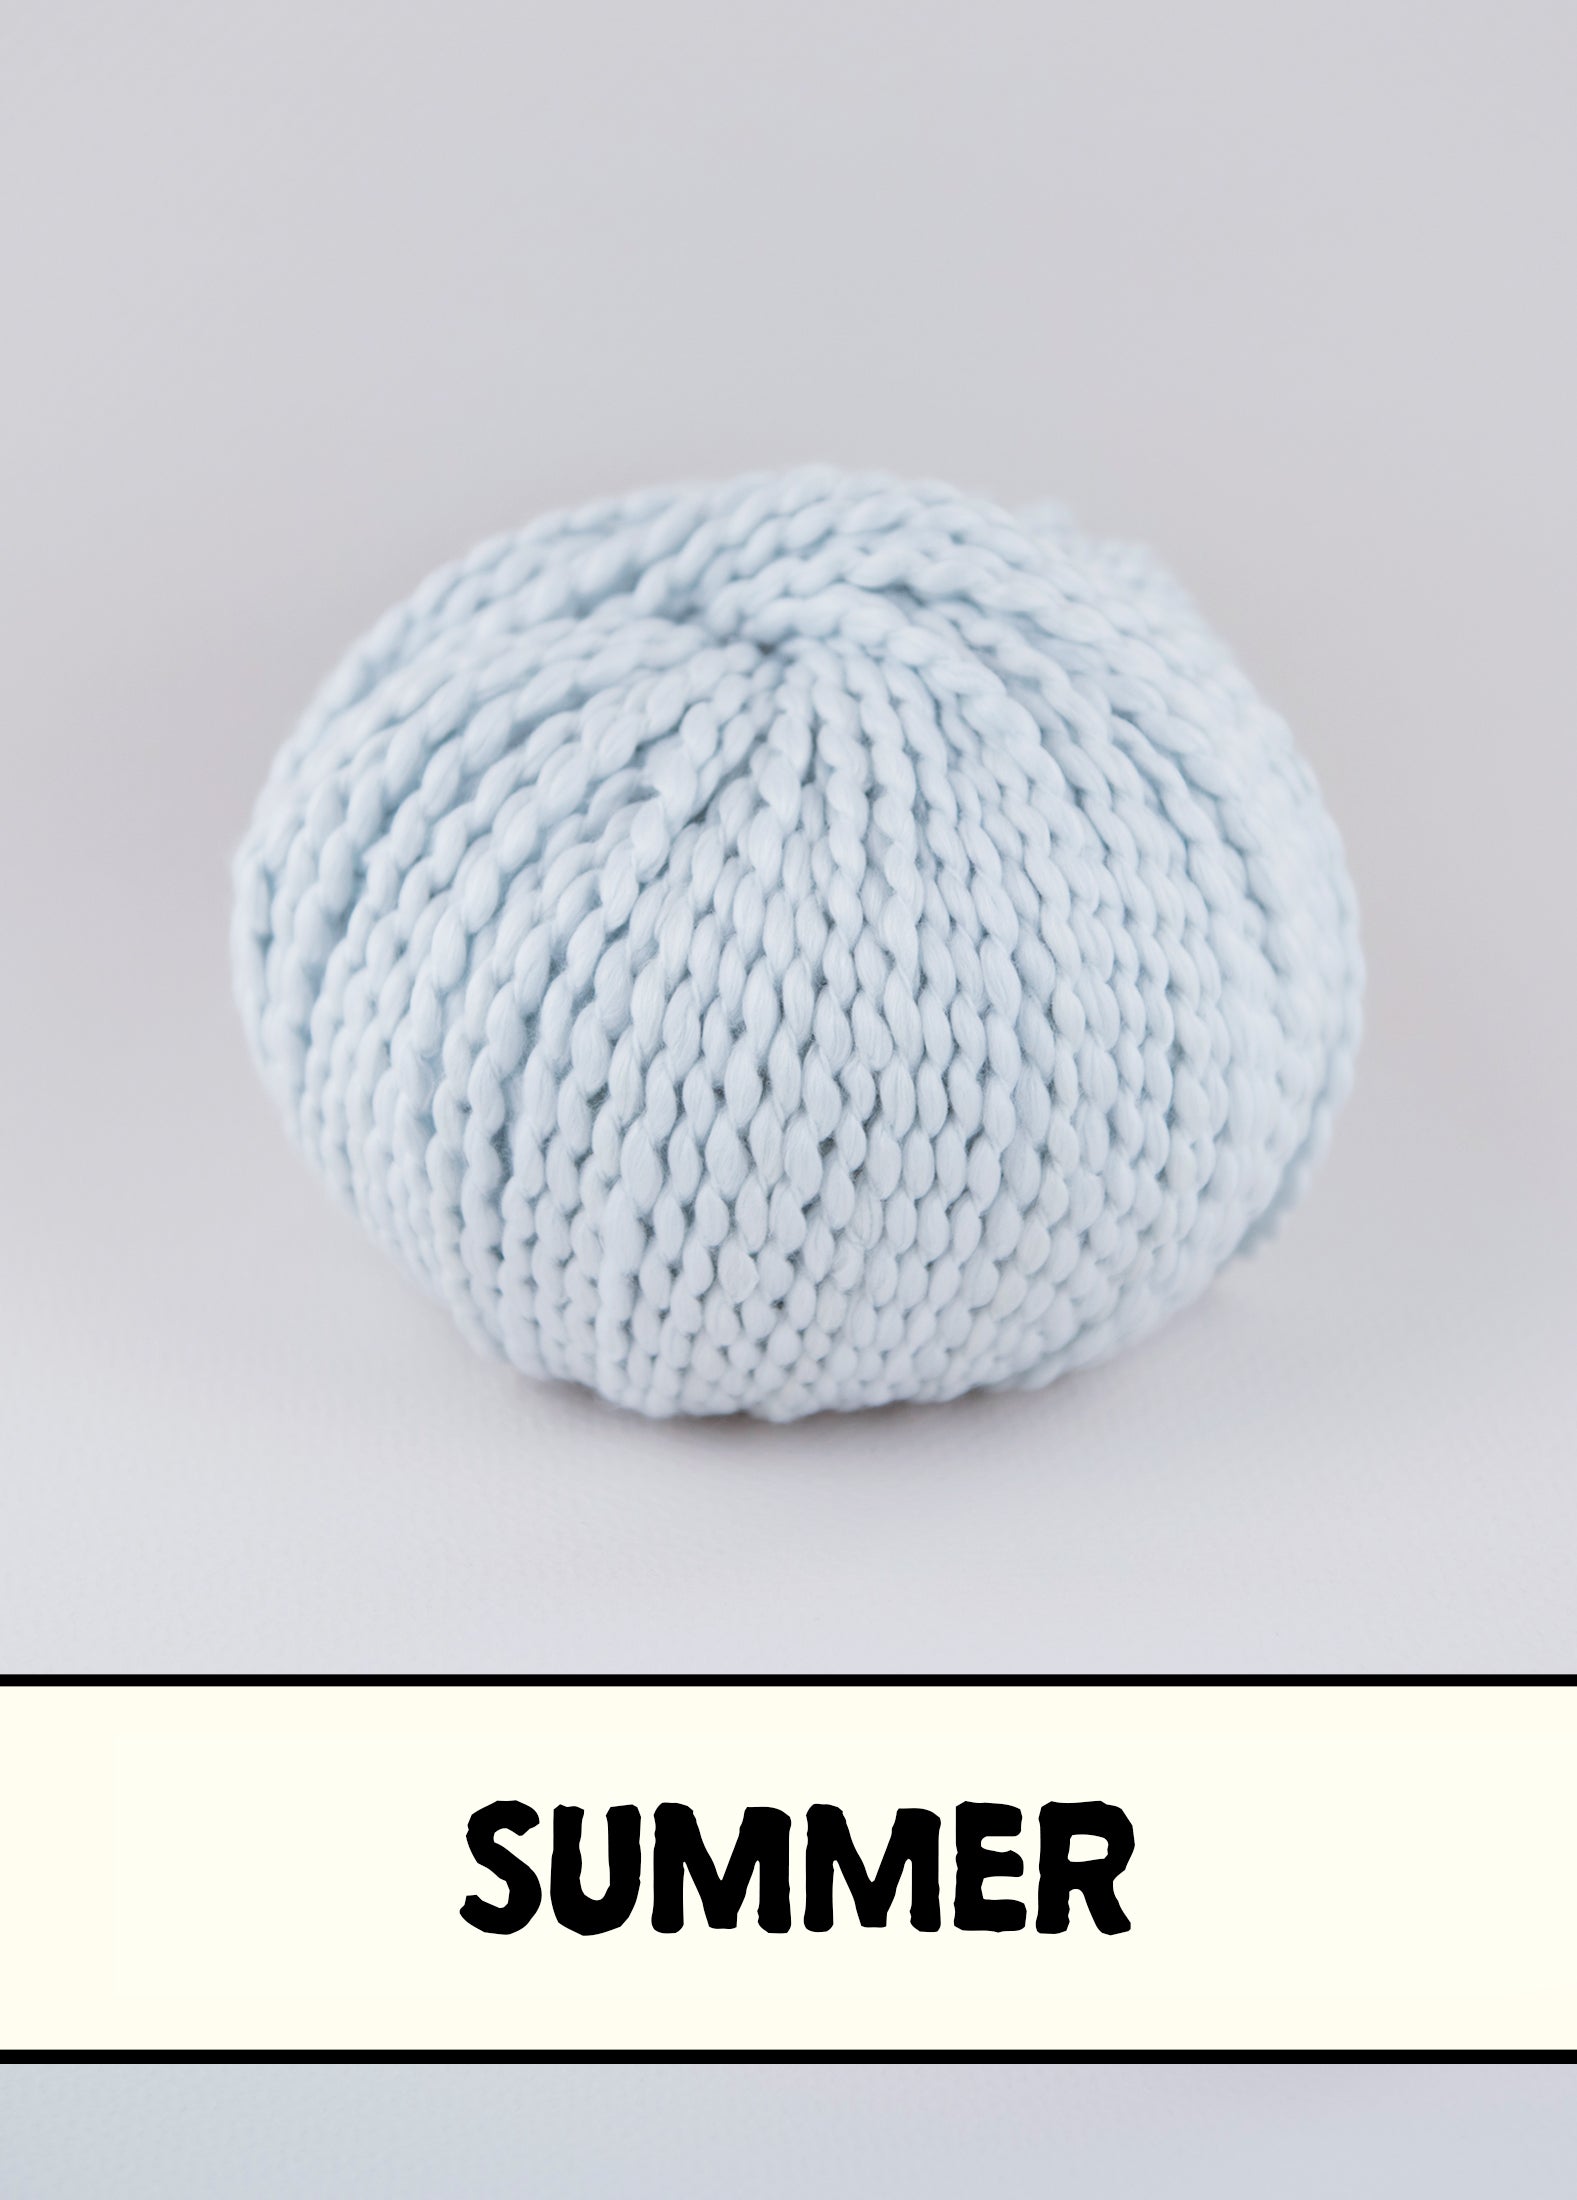 Cotton Warm Soft Natural Knitting Crochet Knitwear Wool Circular Knitting  Needles Size 8 Knitting Bag Knitting Needles Size 8